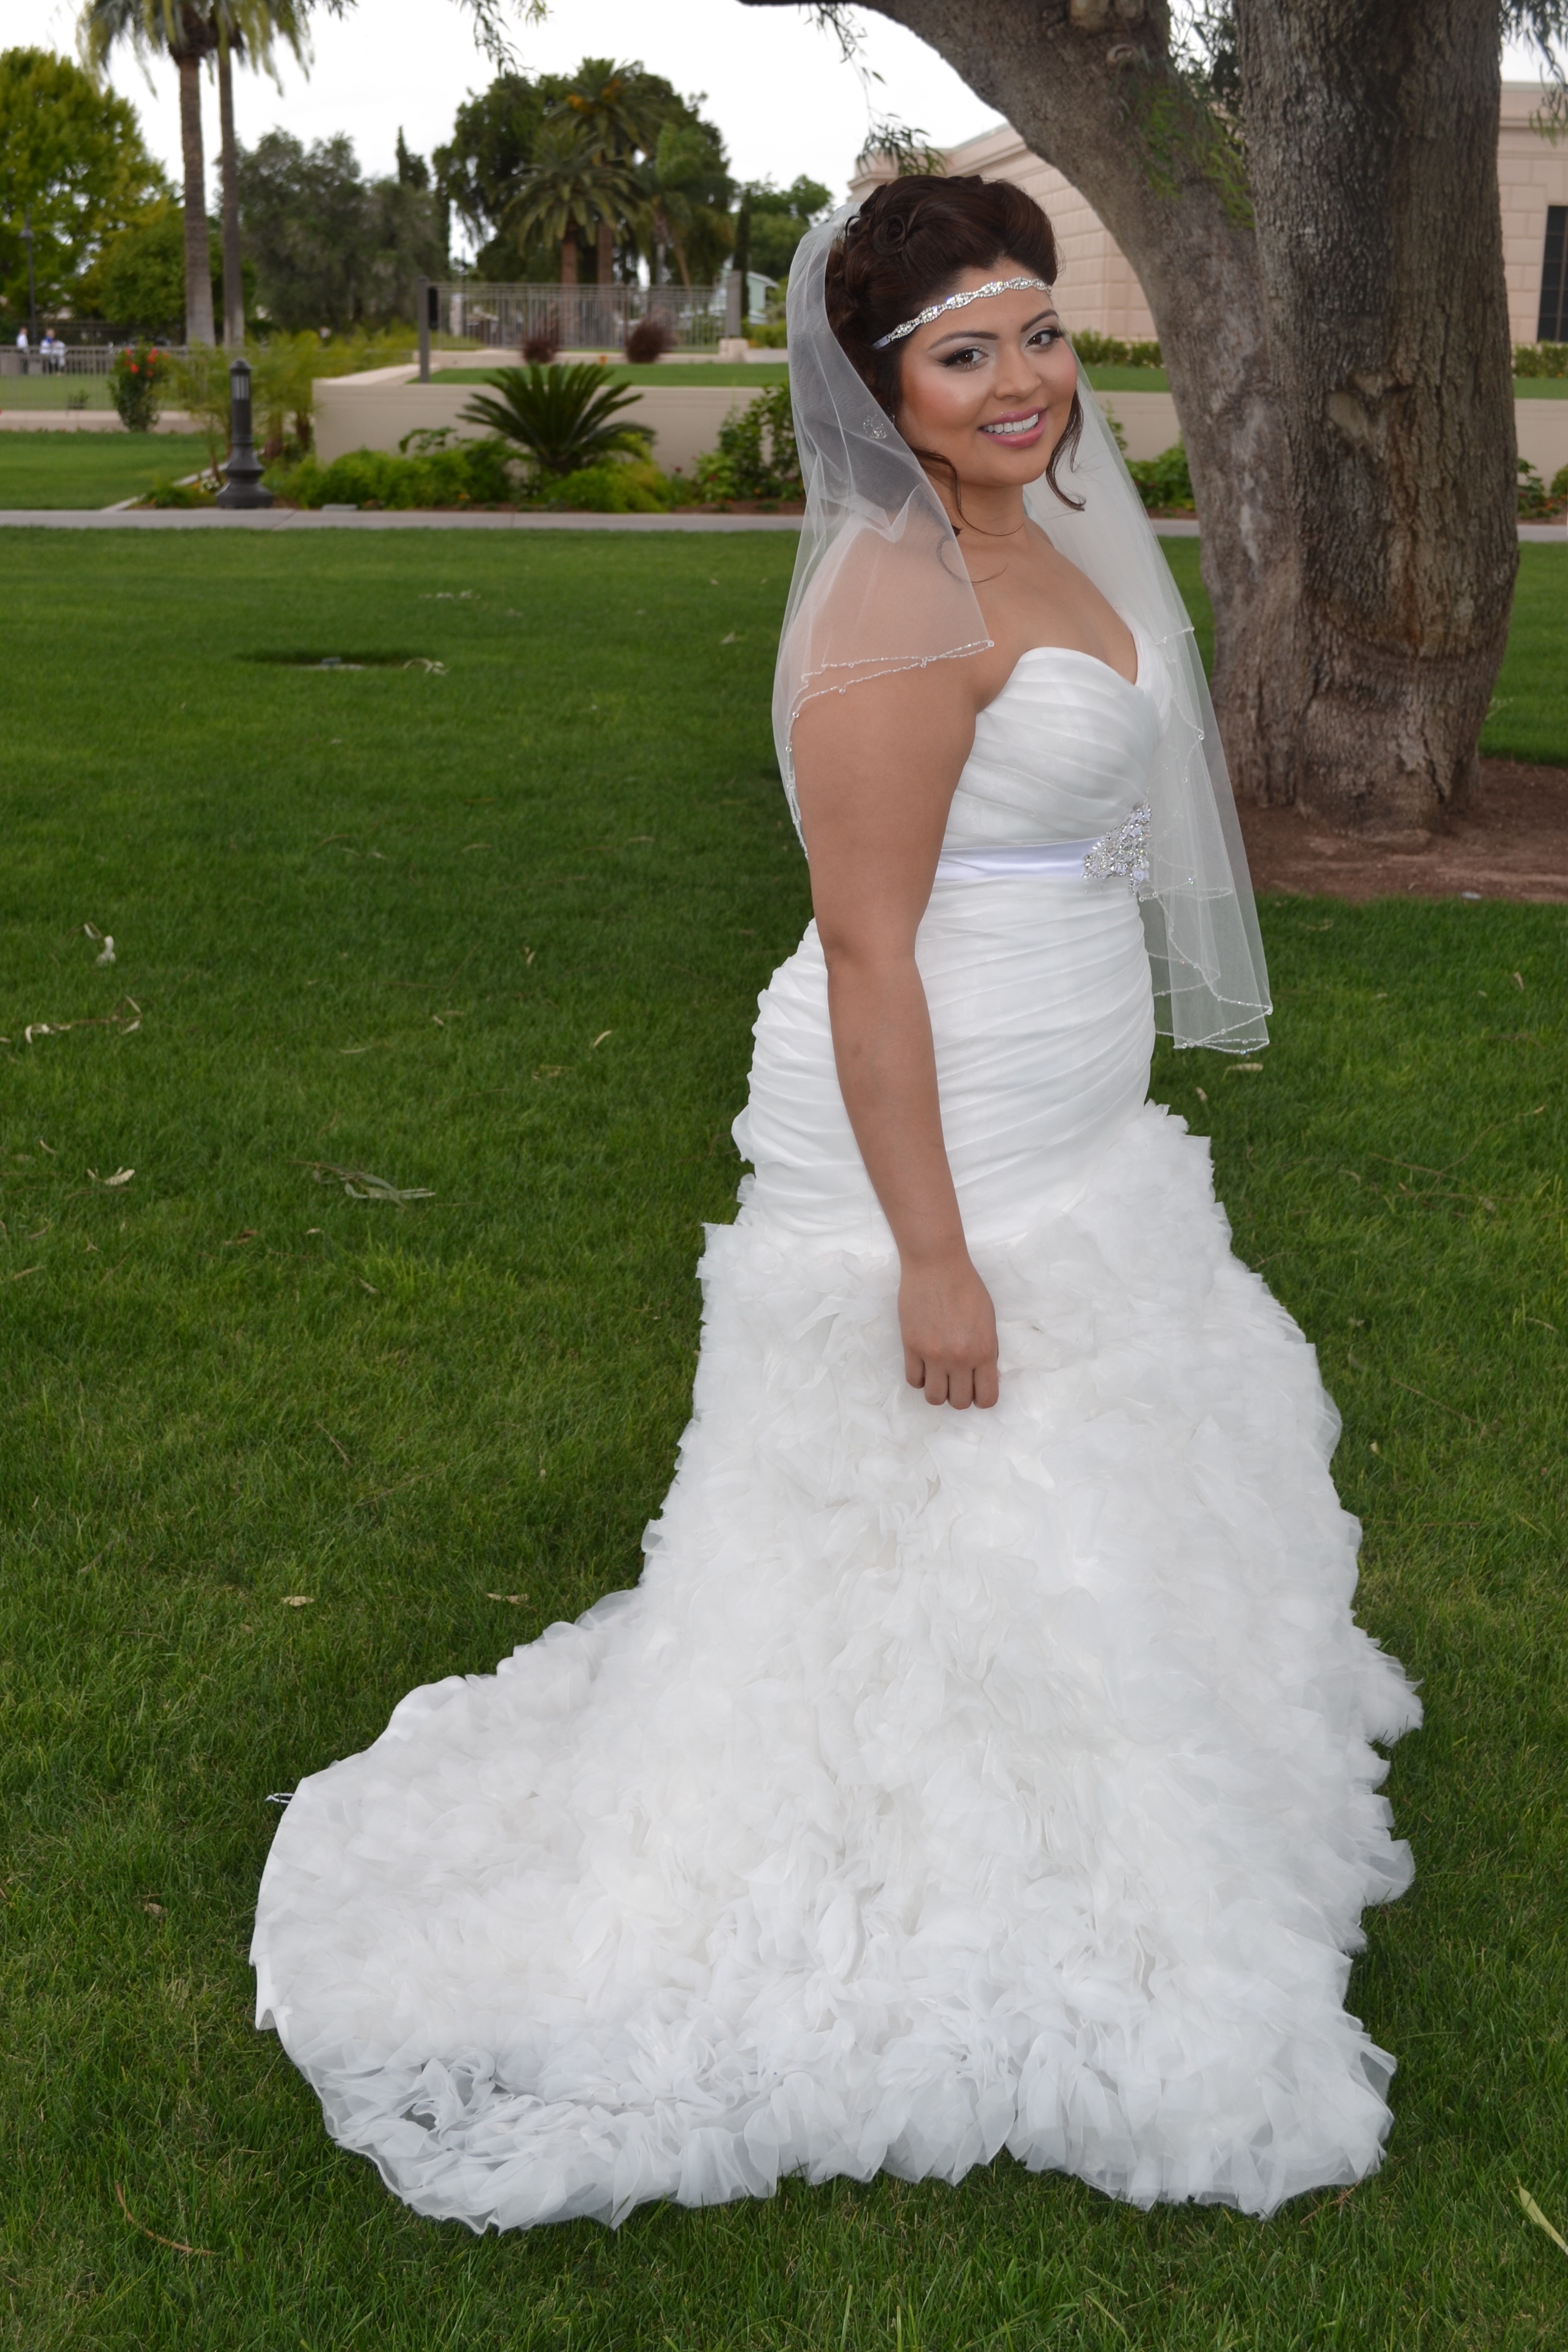 Nicoleh's Fitted Ruffled Wedding Gown - Strut Bridal Salon